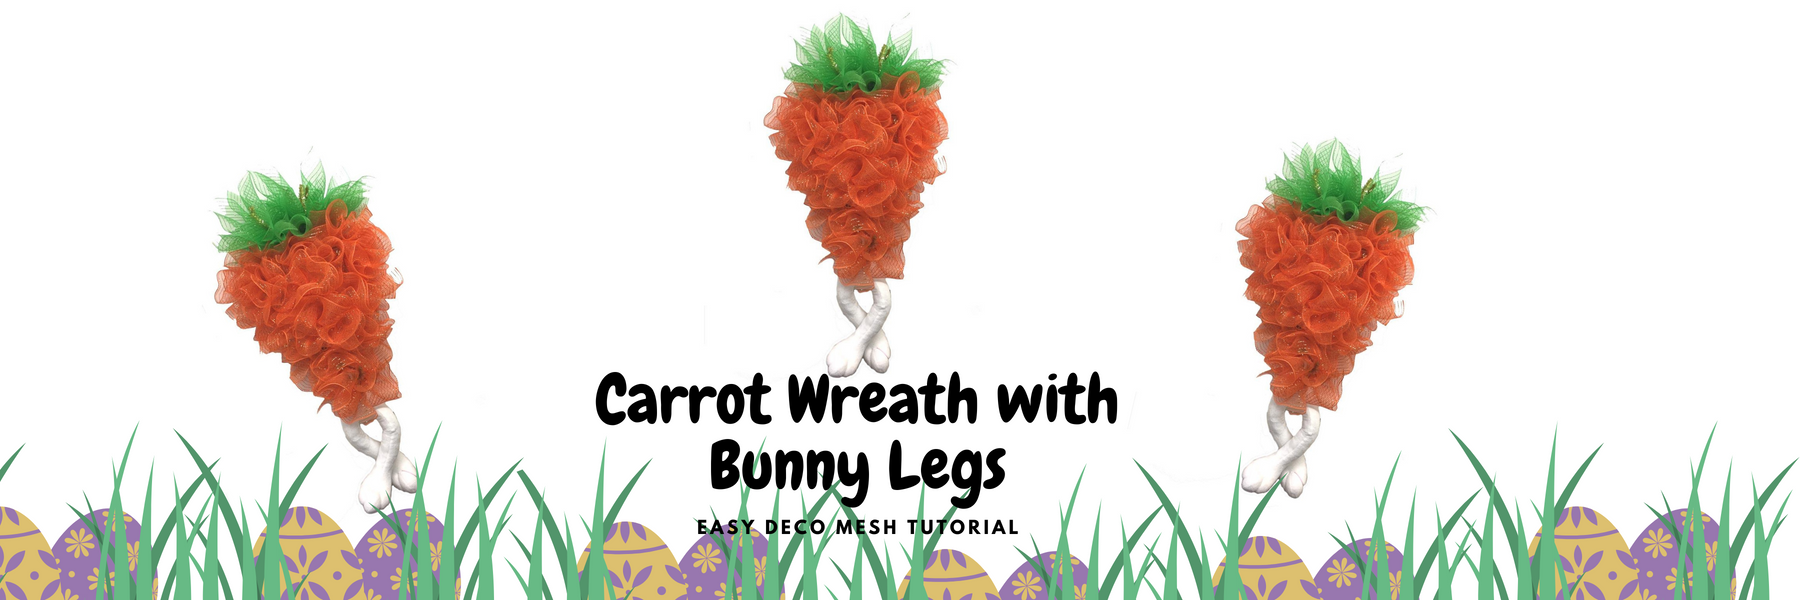 Carrot Wreath with Bunny Legs Tutorial Facebook Live